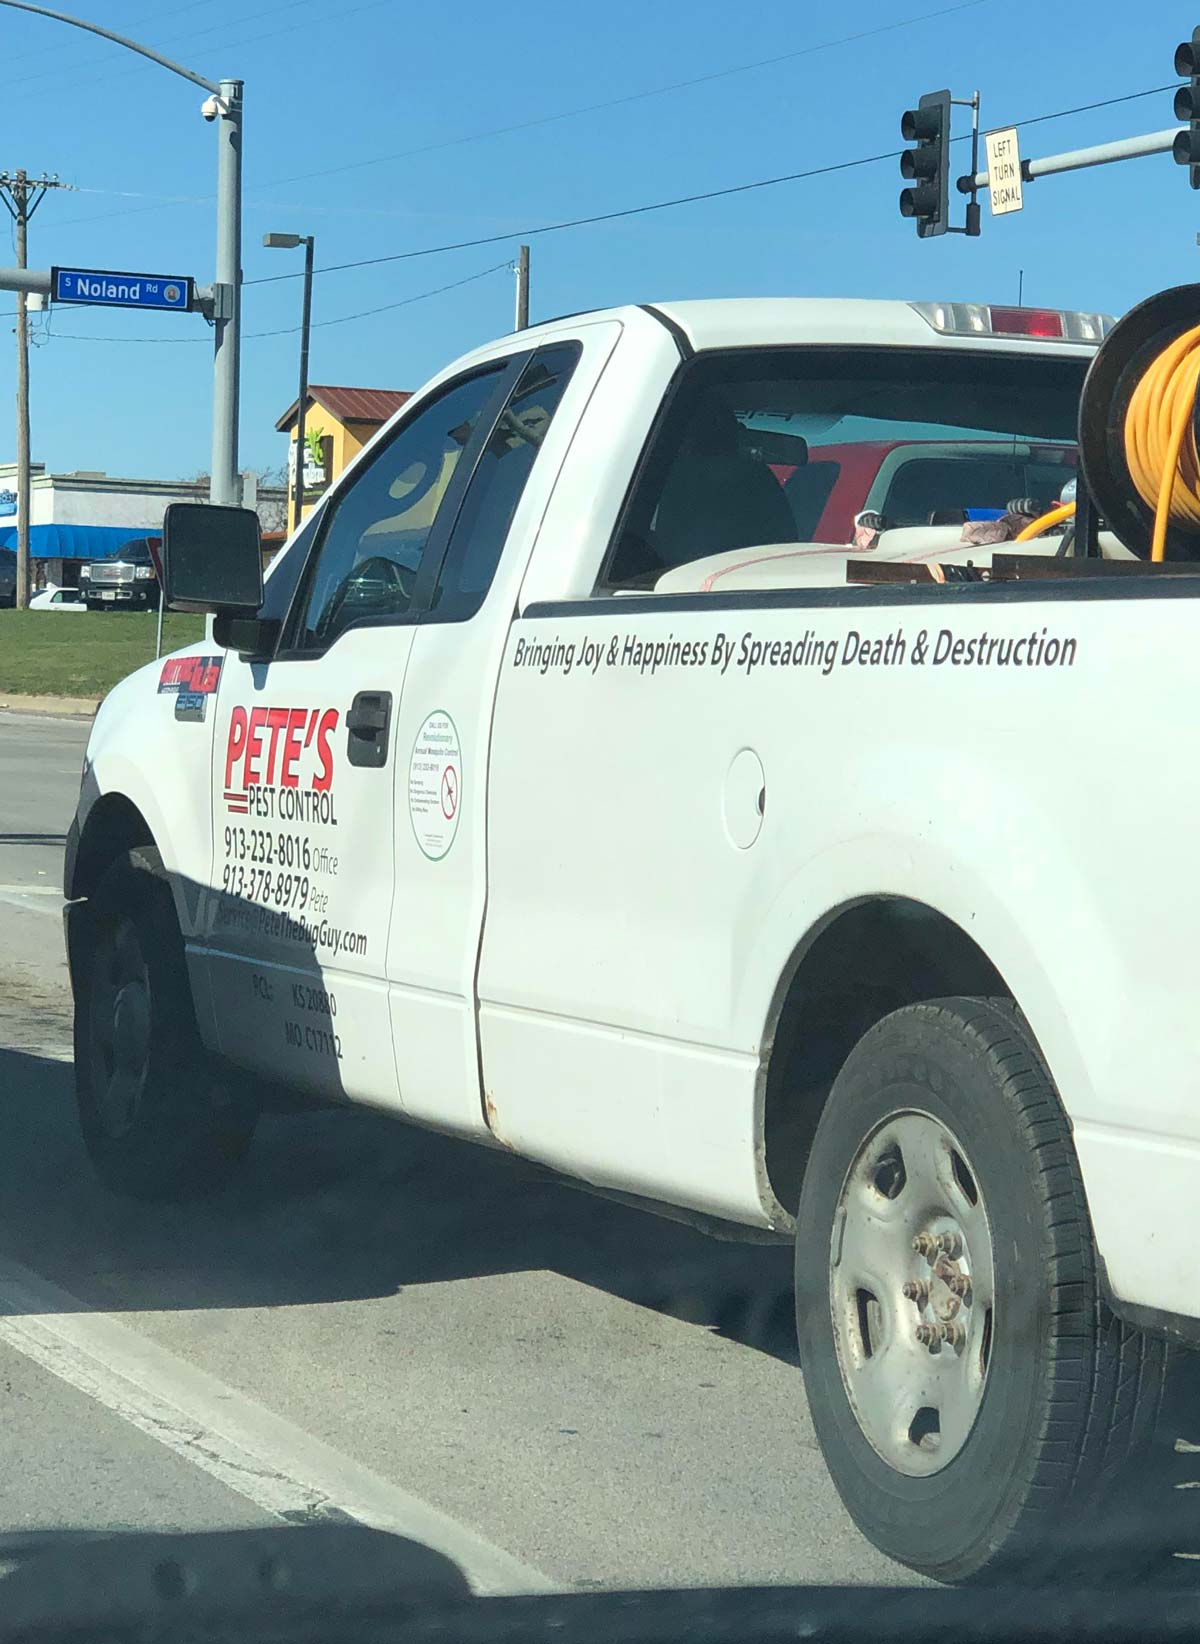 This pest control company slogan